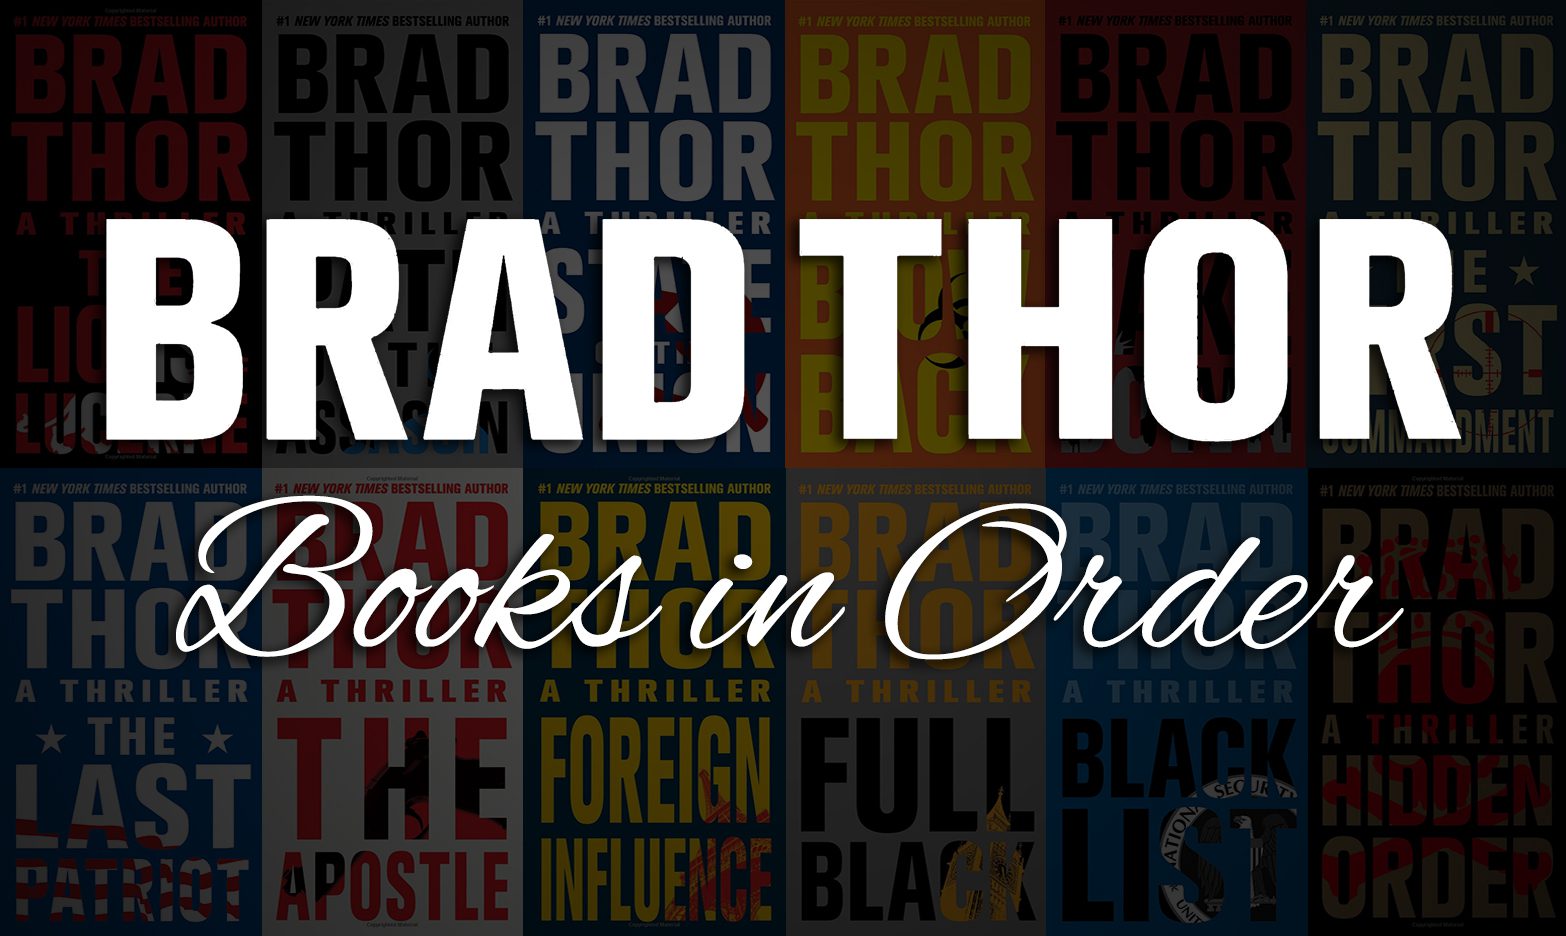 Brad Thor Books In Order [All 25+ Scot Harvath Books]